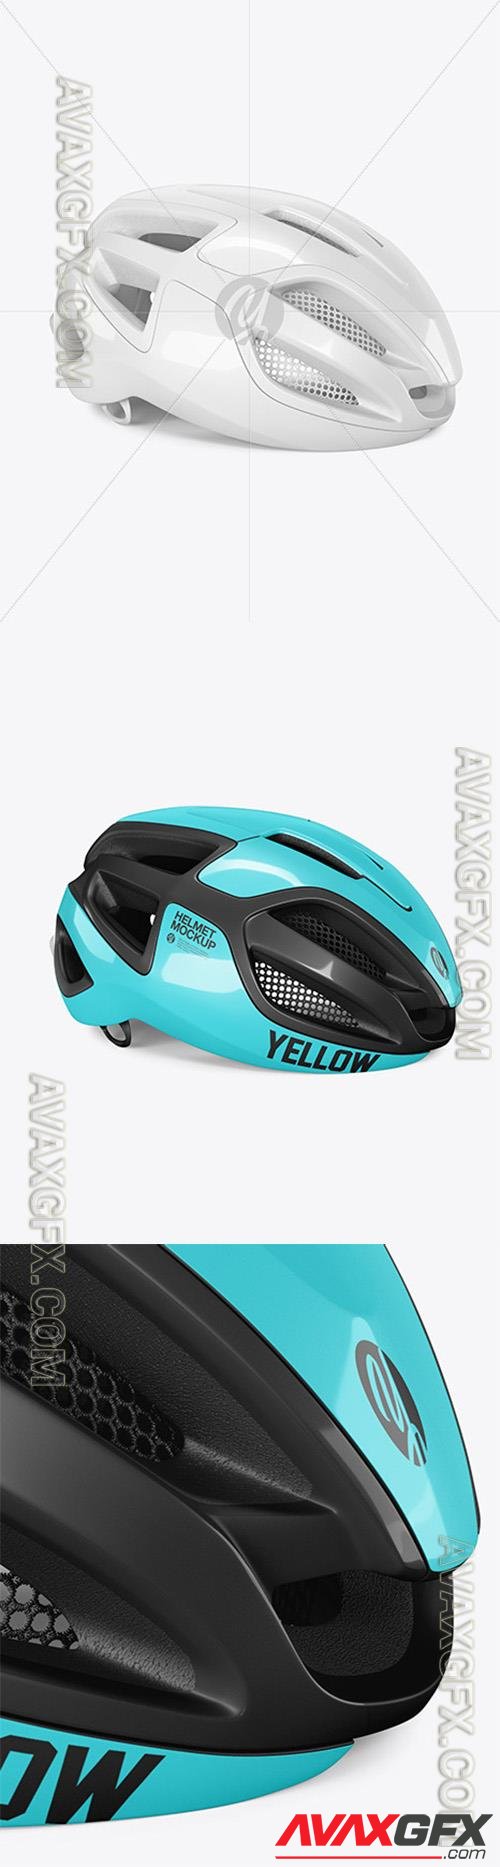 Cycling Helmet Mockup 75967